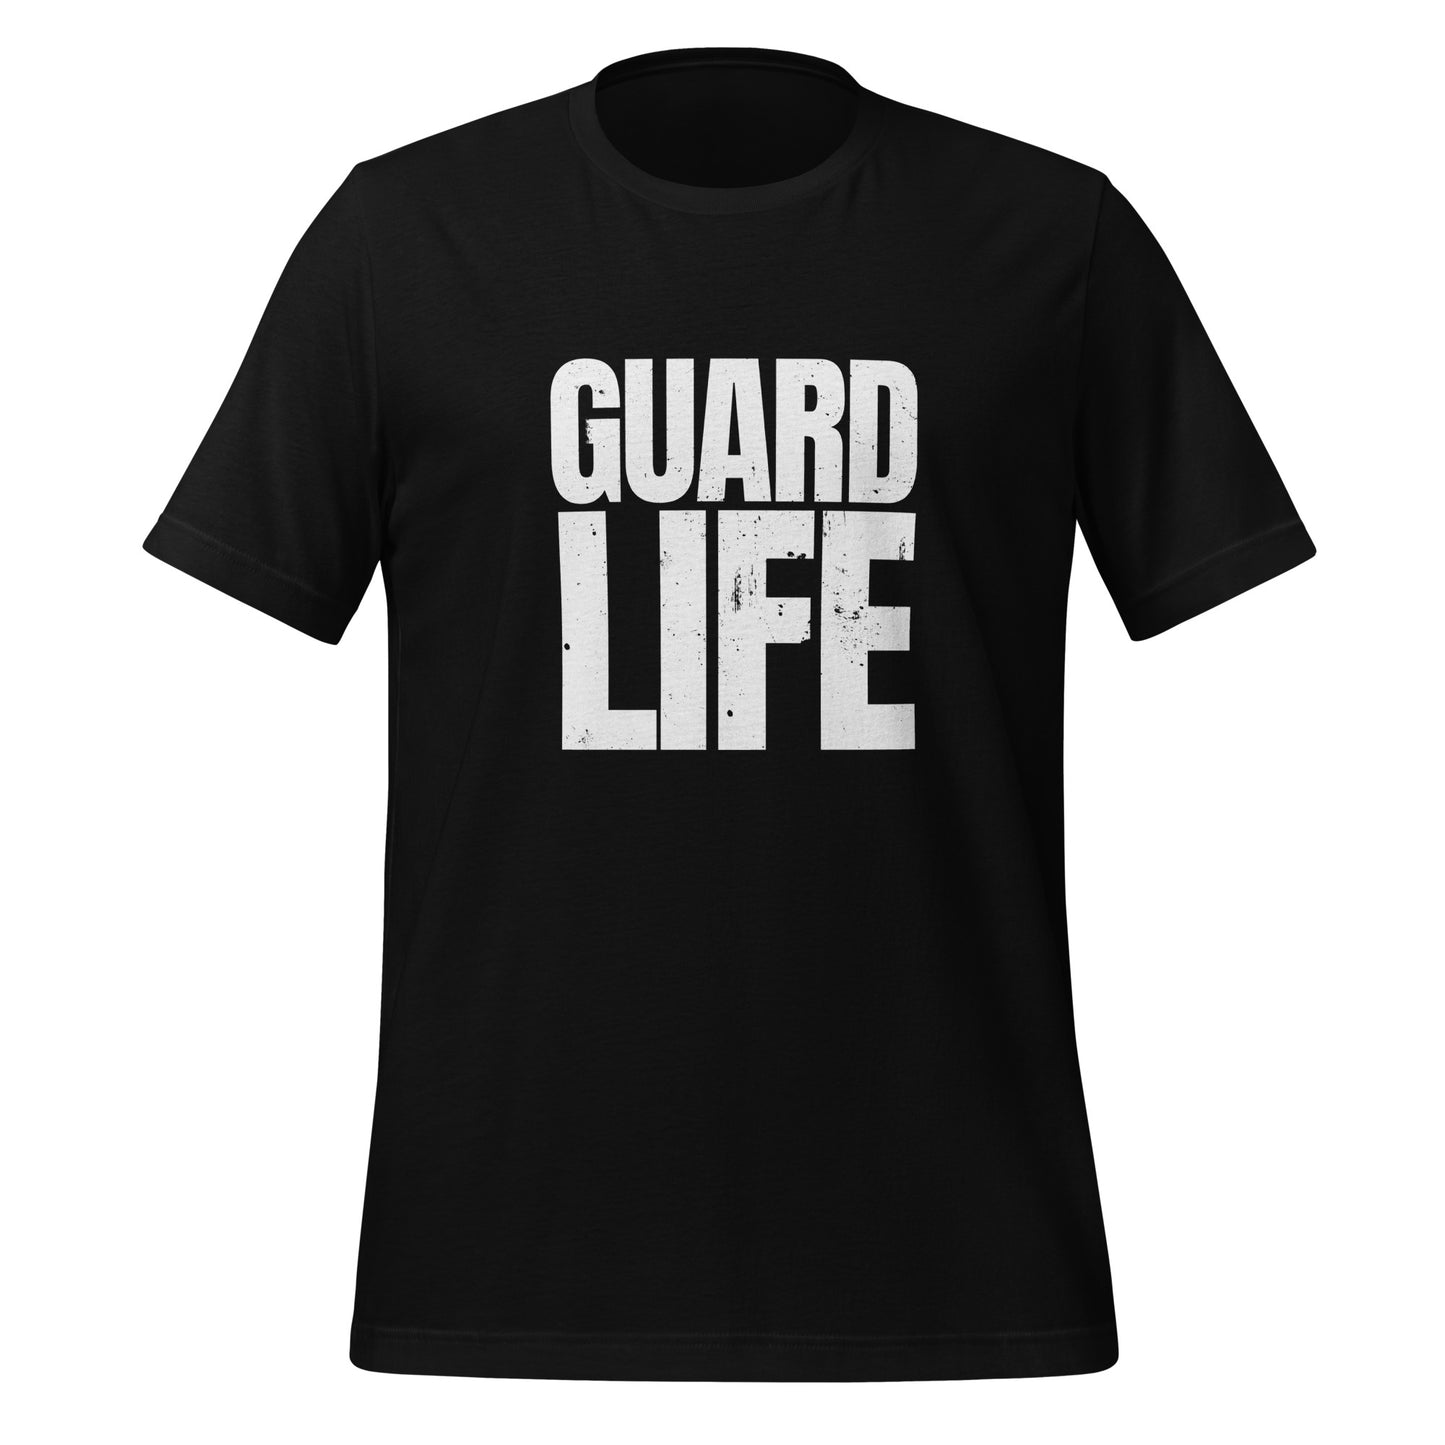 GUARD LIFE (Color Guard) Adult unisex t-shirt